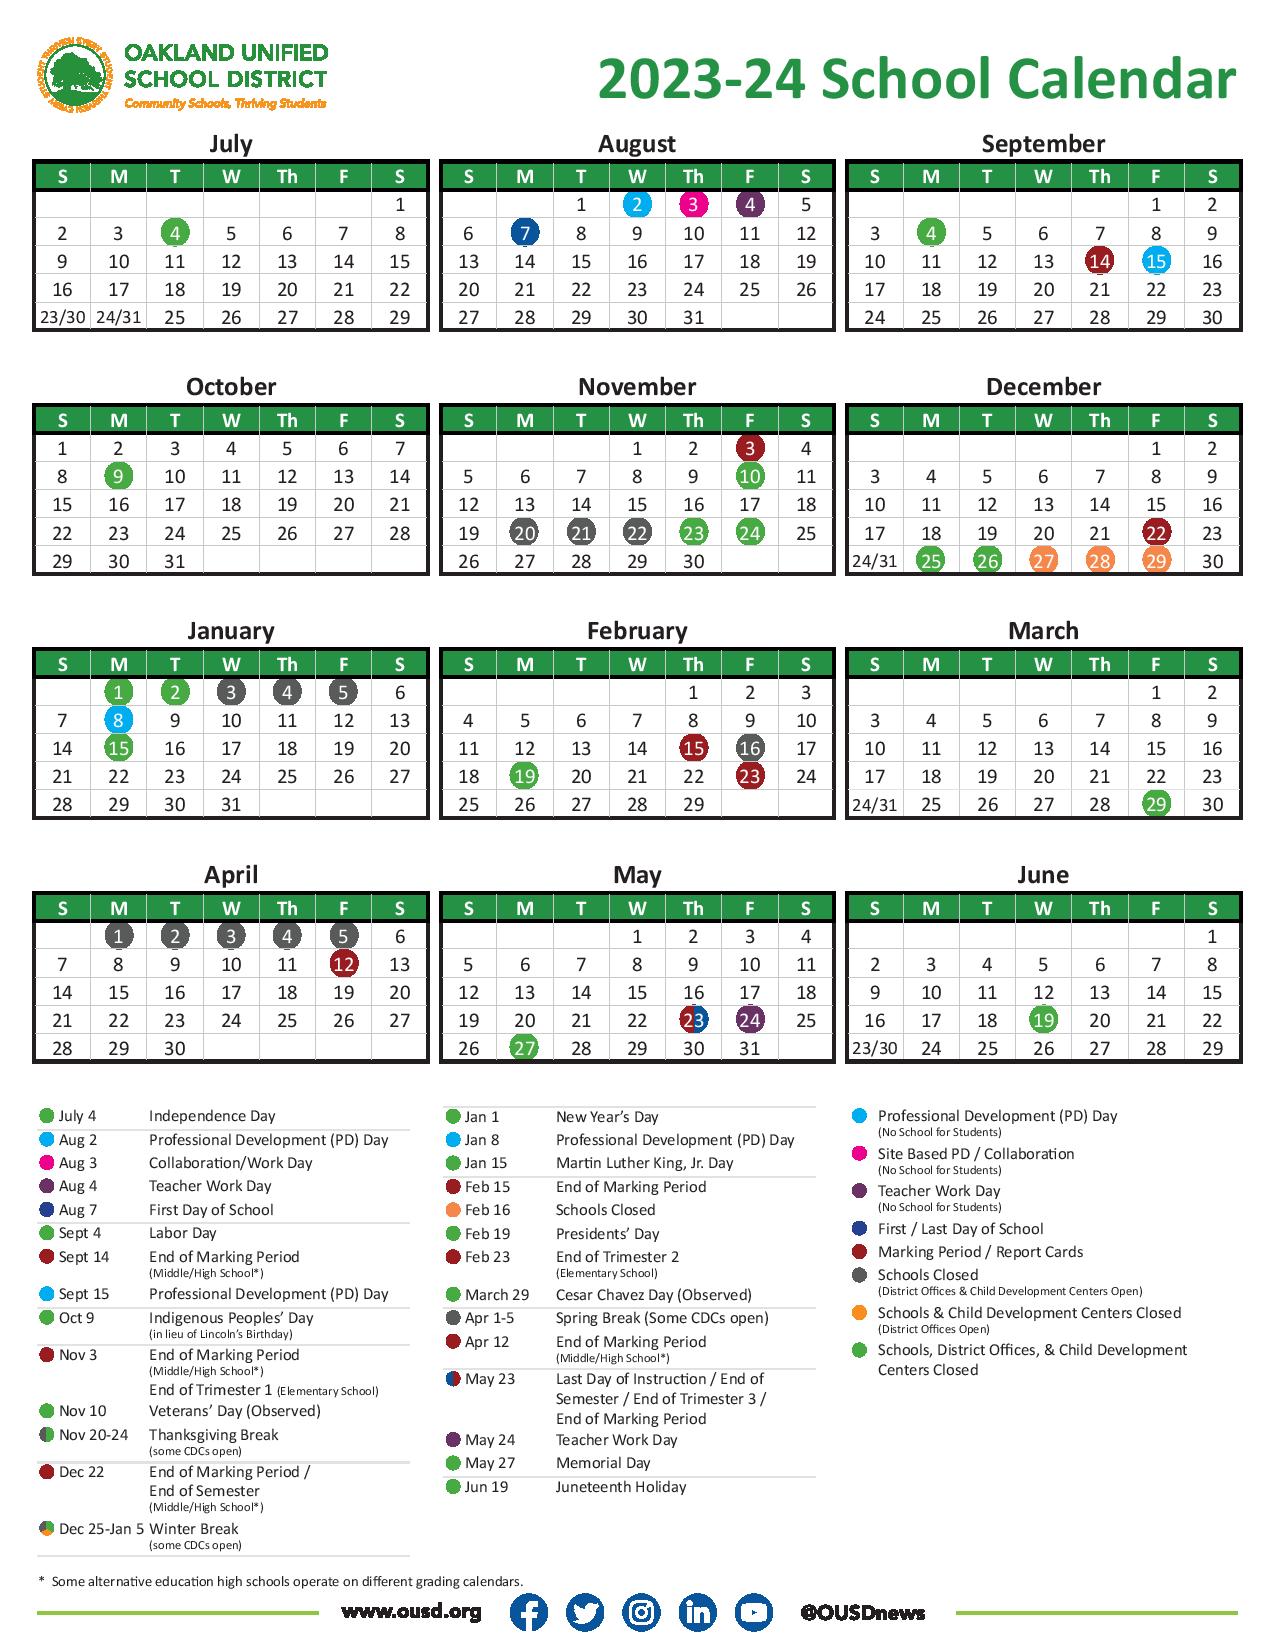 Oakland Unified School District Calendar 2024 PDF